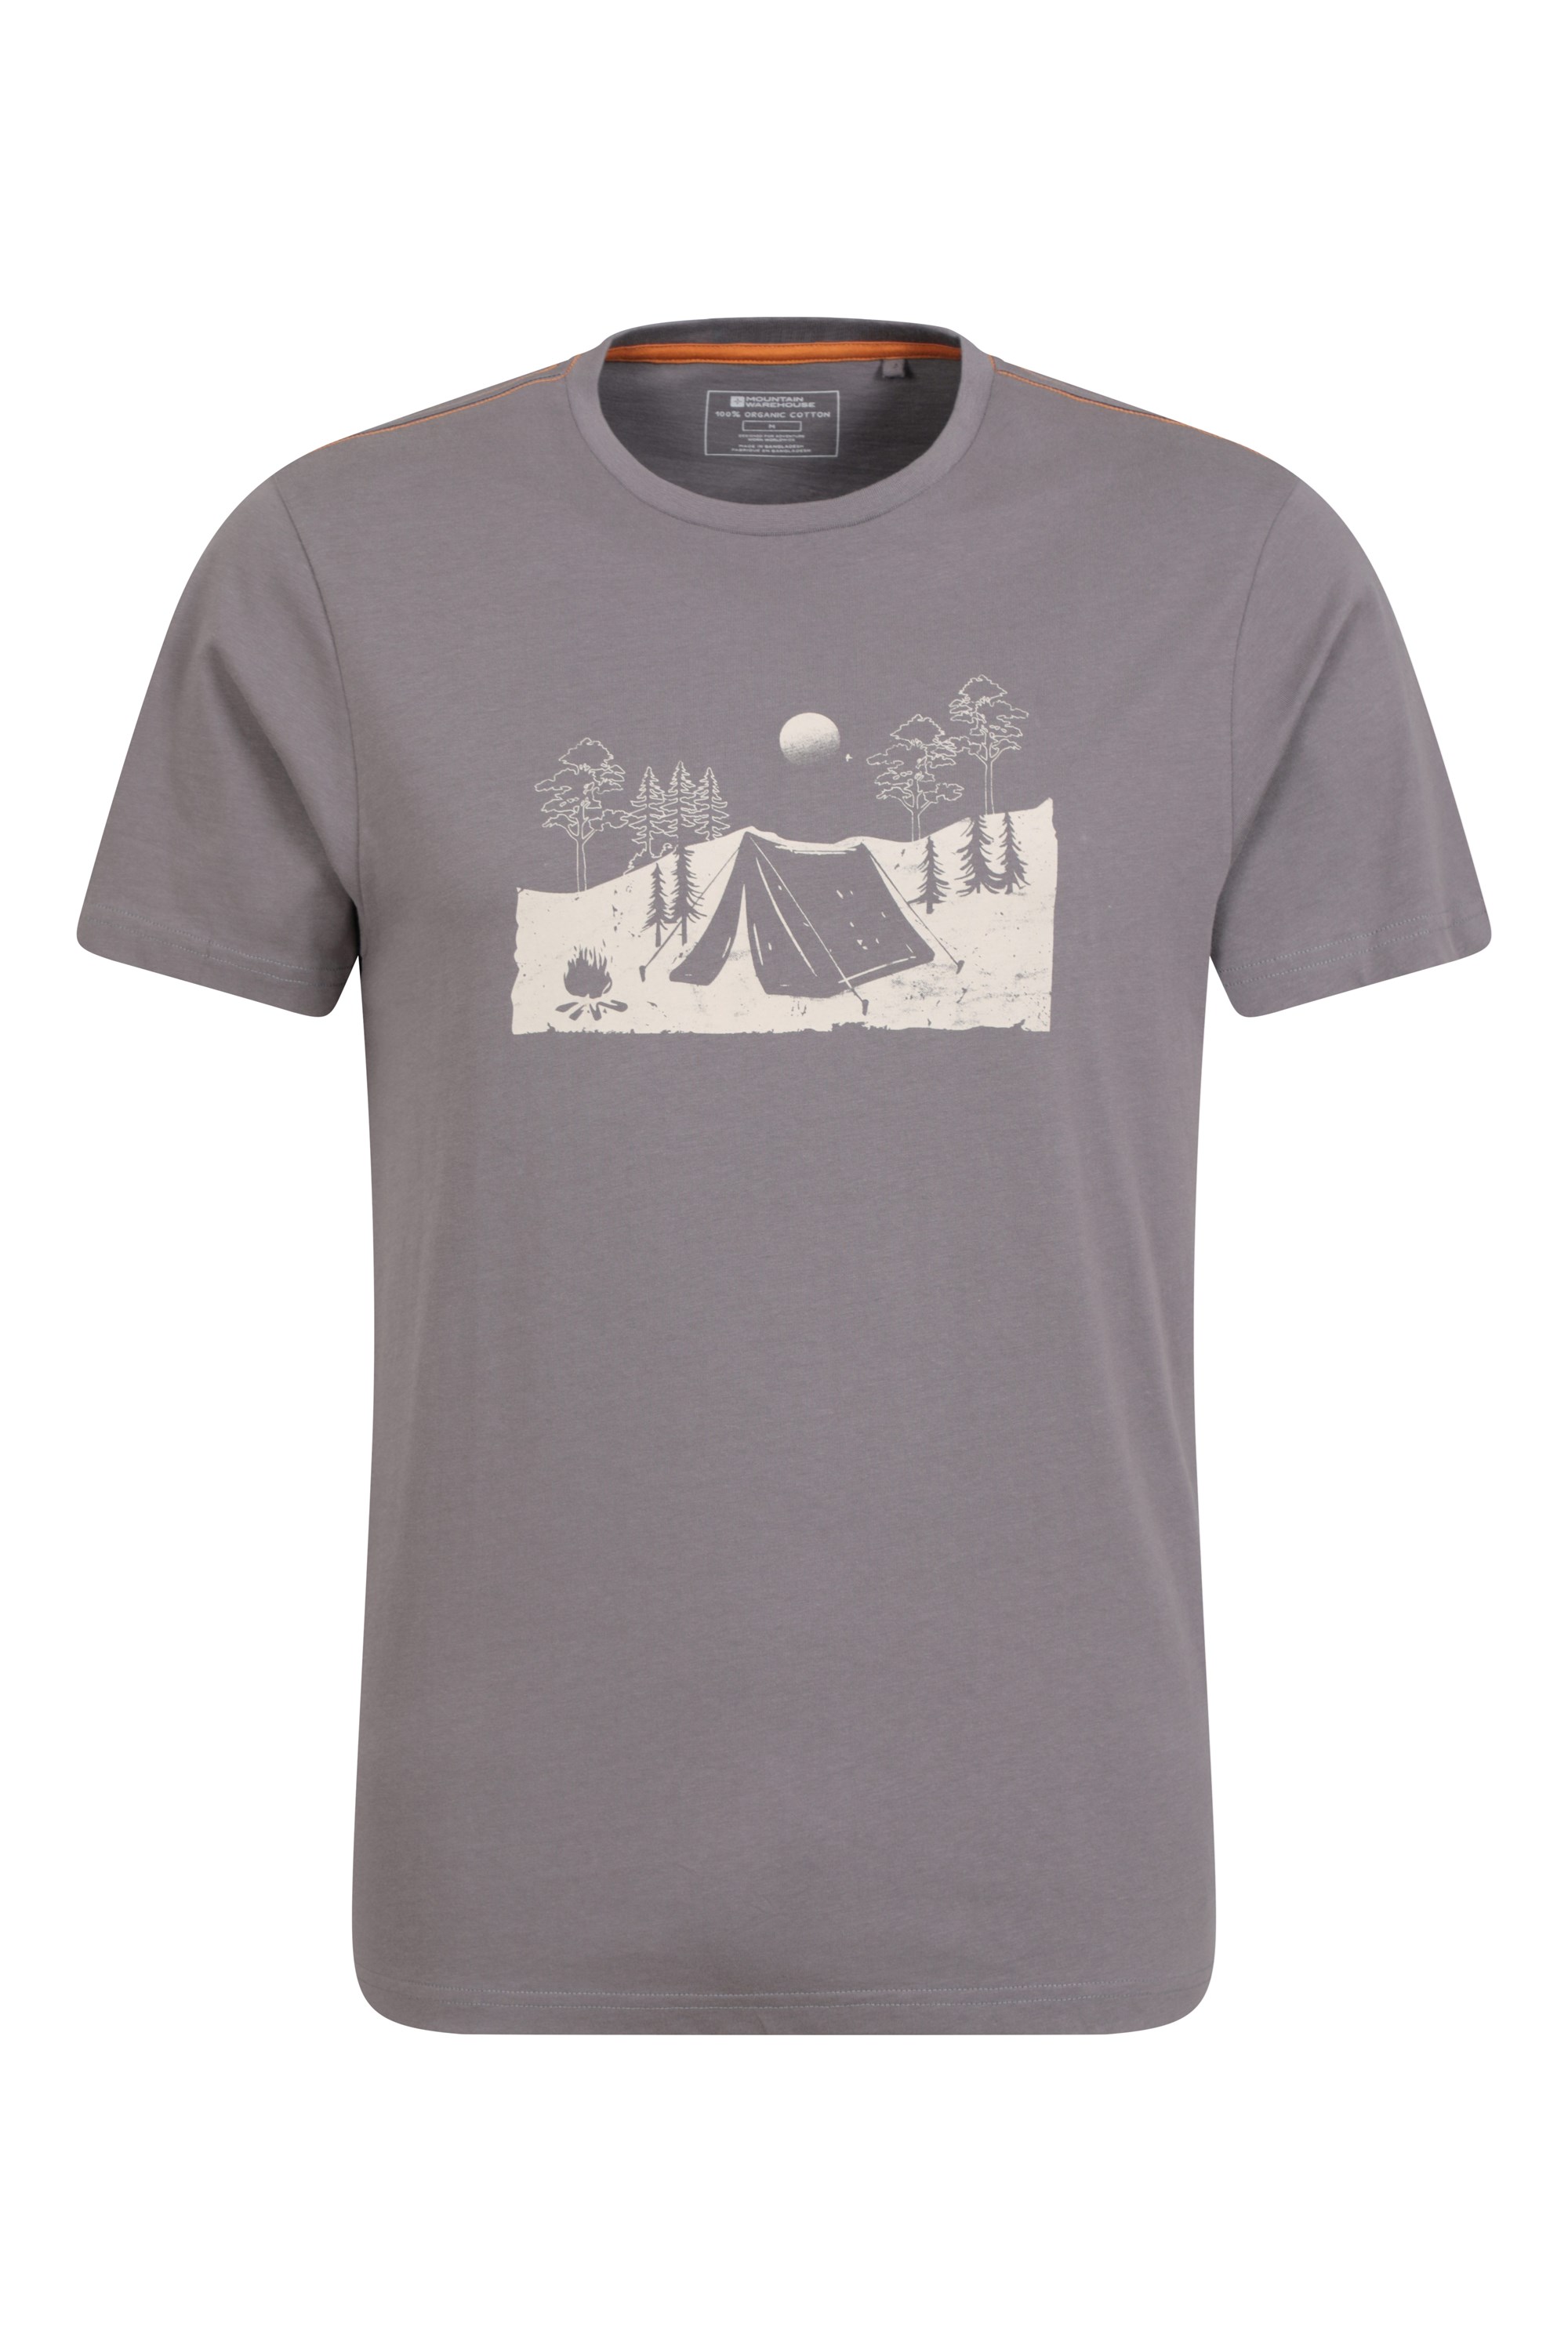 Camping Sketch Mens Organic T-Shirt